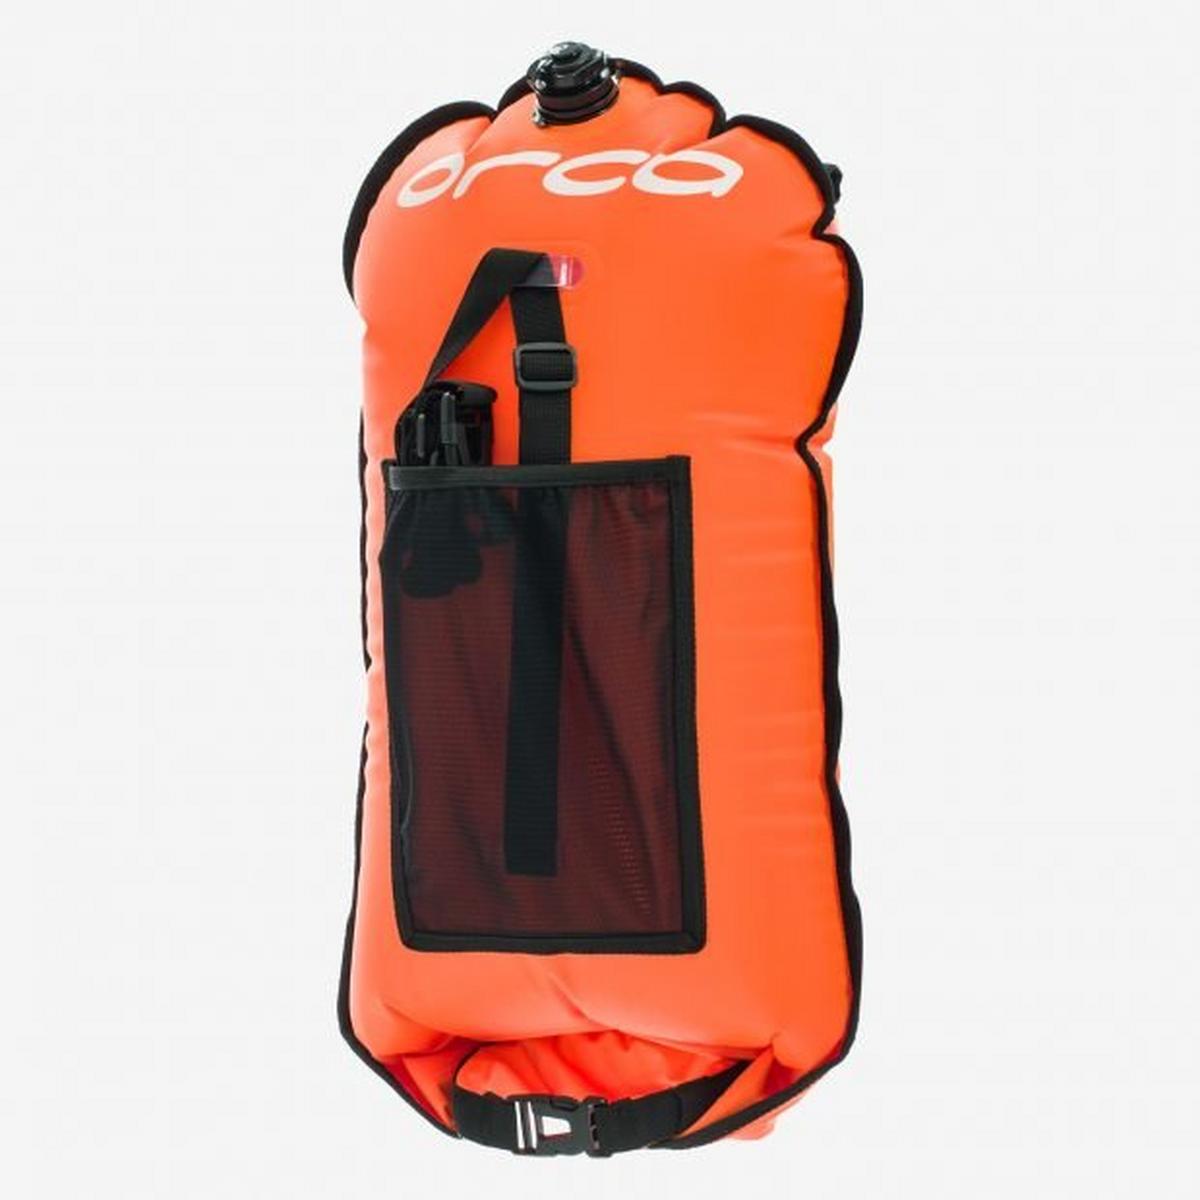 Orca Safety Bag - Orange